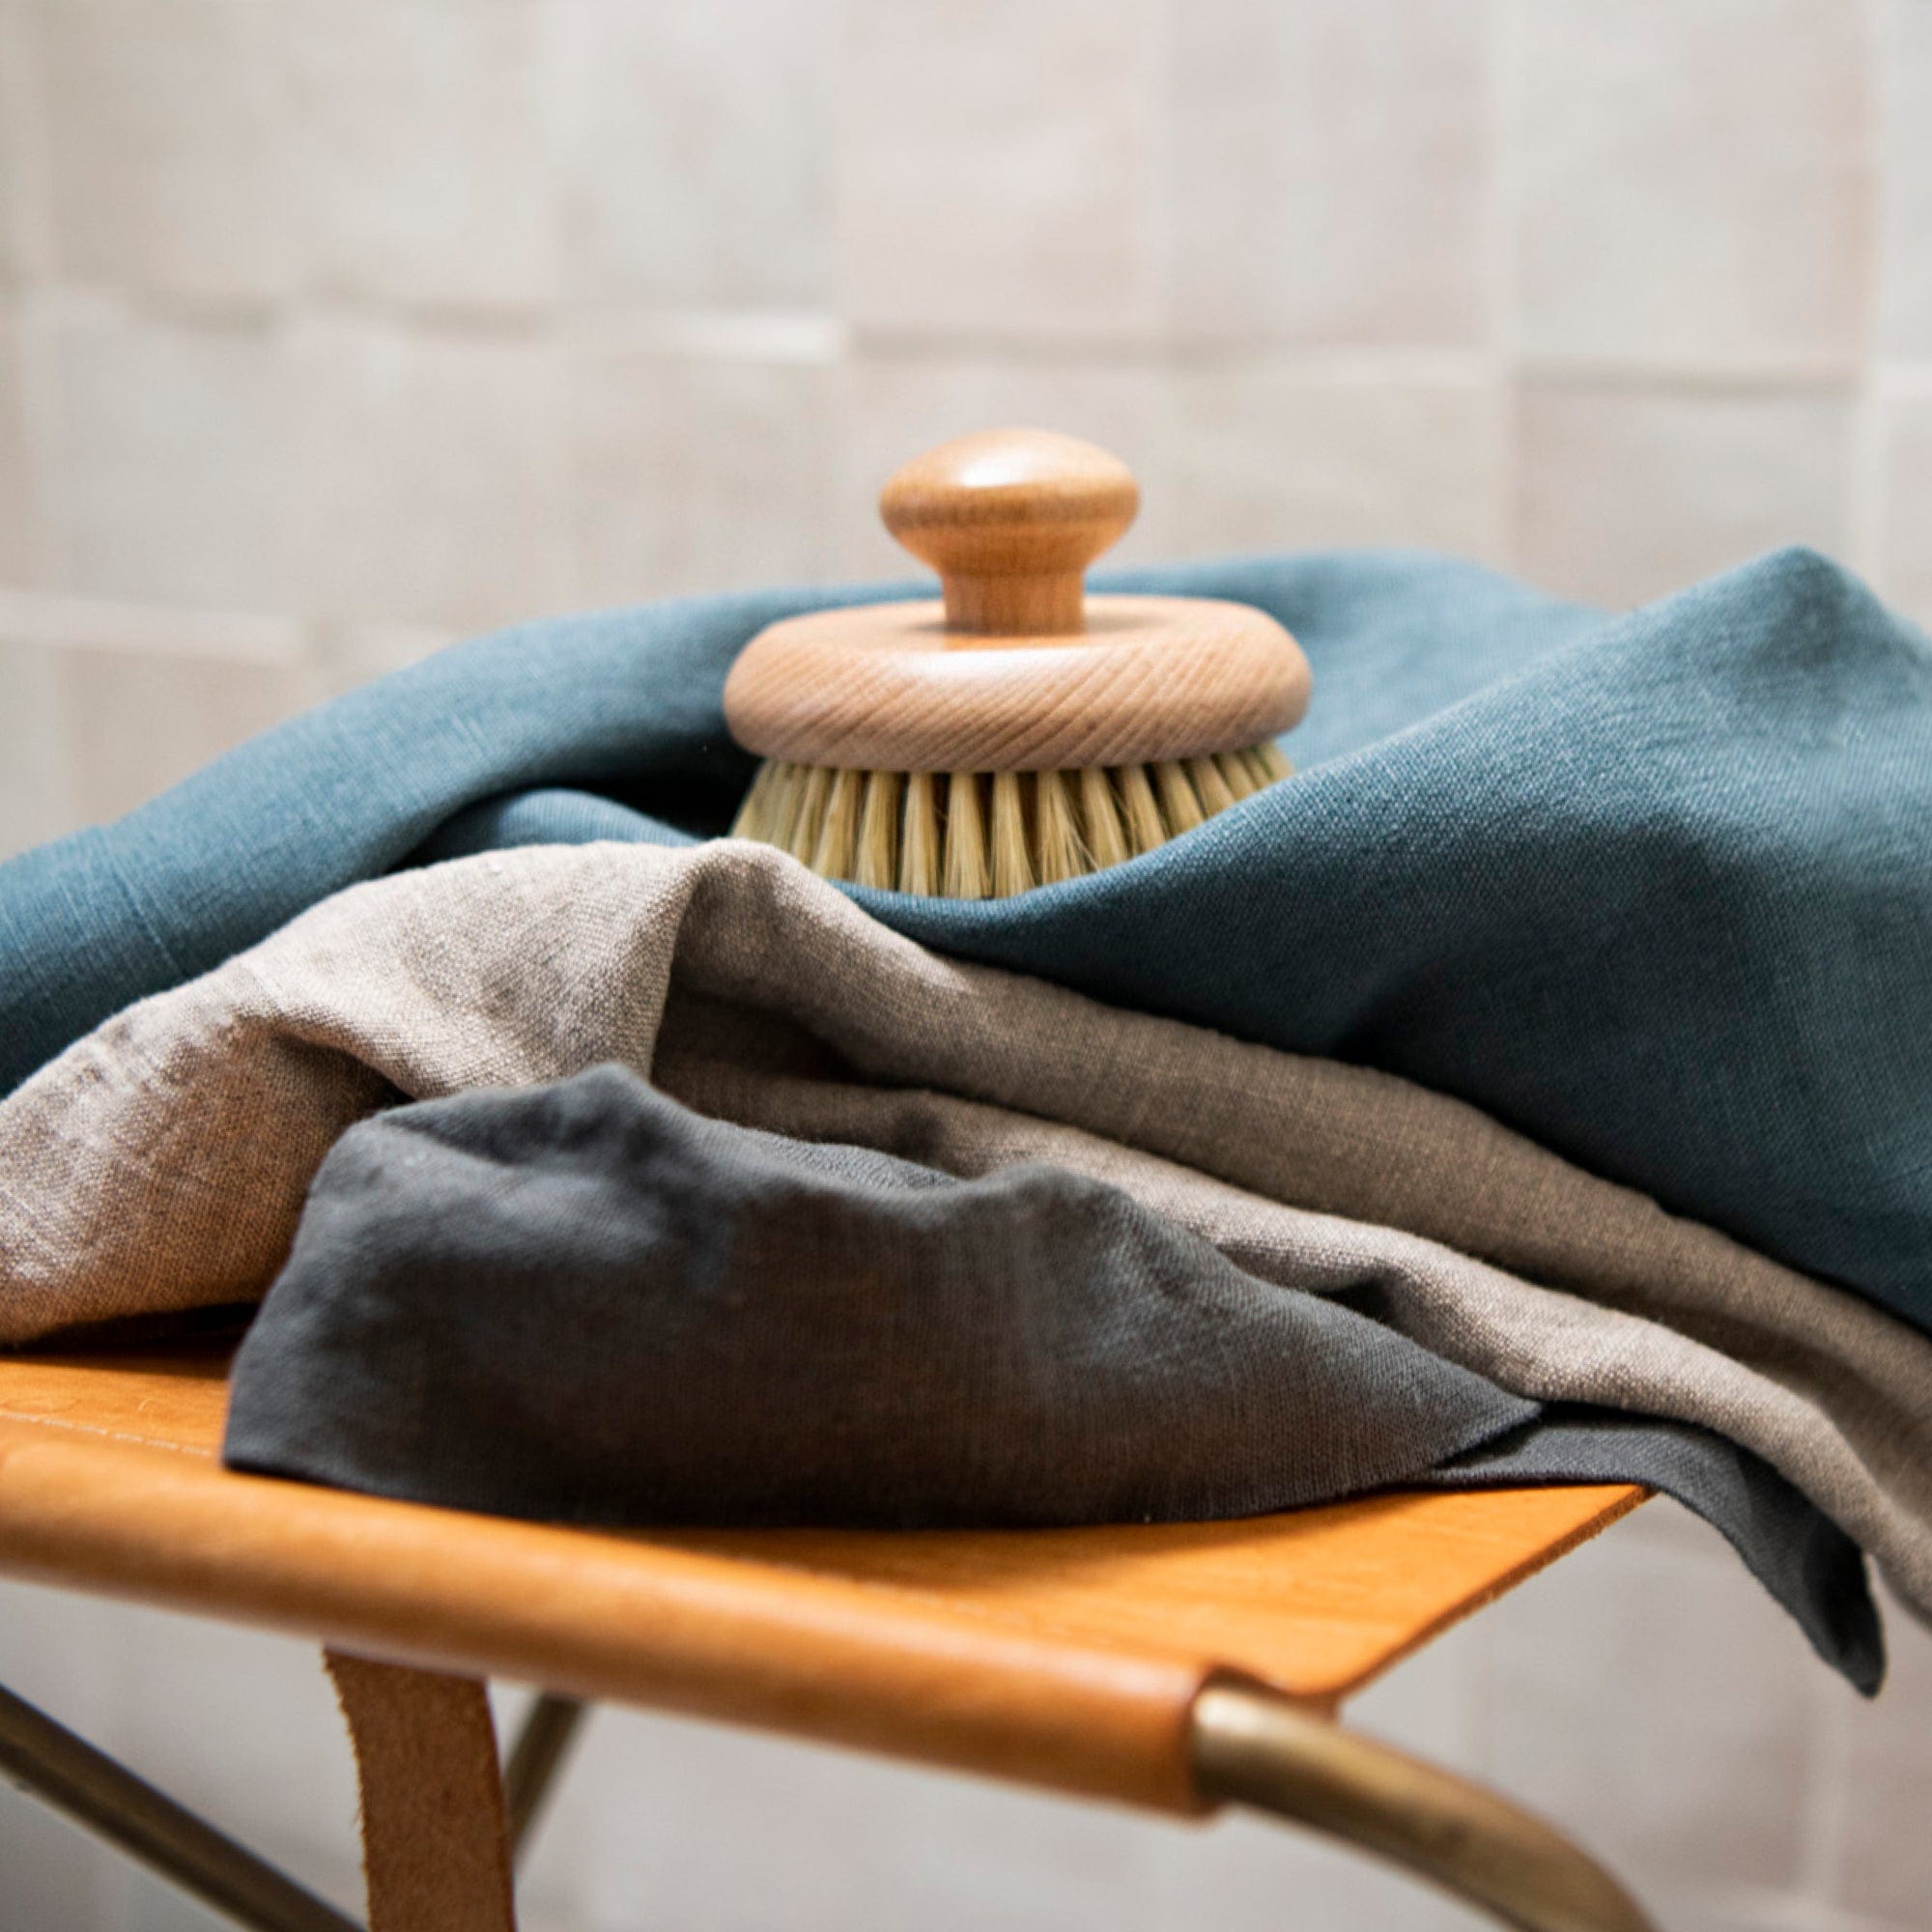 Ash Antimicrobial Organic Cotton Washcloth + Reviews